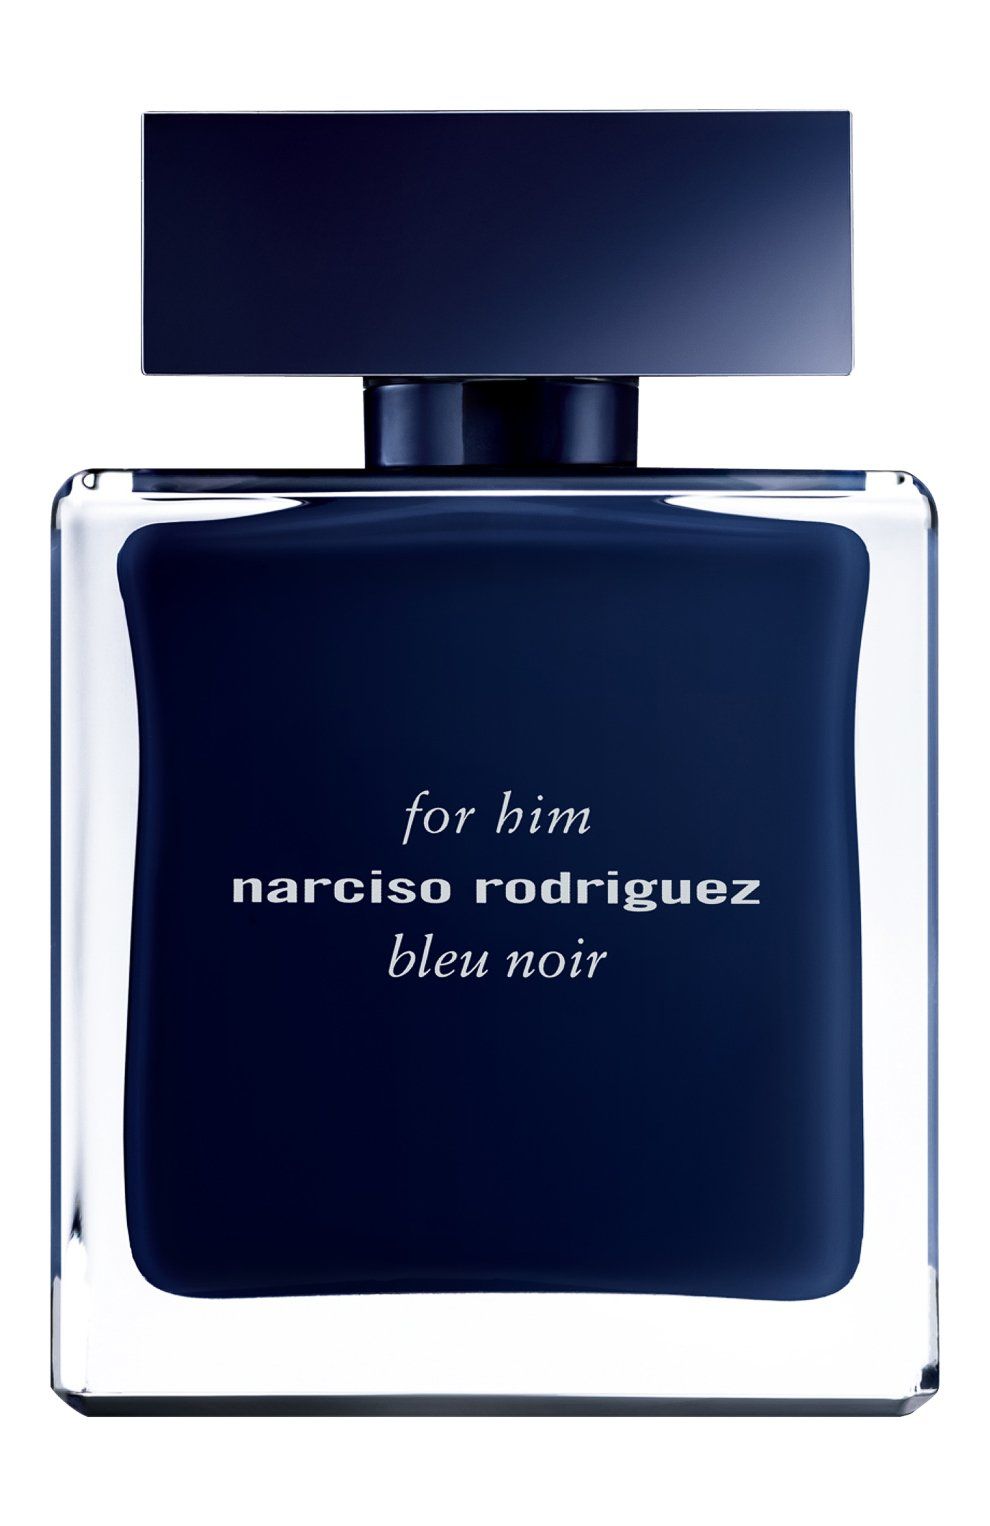 Narciso rodriguez for him bleu. Narciso Rodriguez bleu Noir духи. Narciso Rodriguez for him bleu Noir 100 мл. Туалетная вода Narciso Rodriguez bleu Noir for him, 100 мл. Narciso Rodriguez for him Blue Noir EDP 20ml.